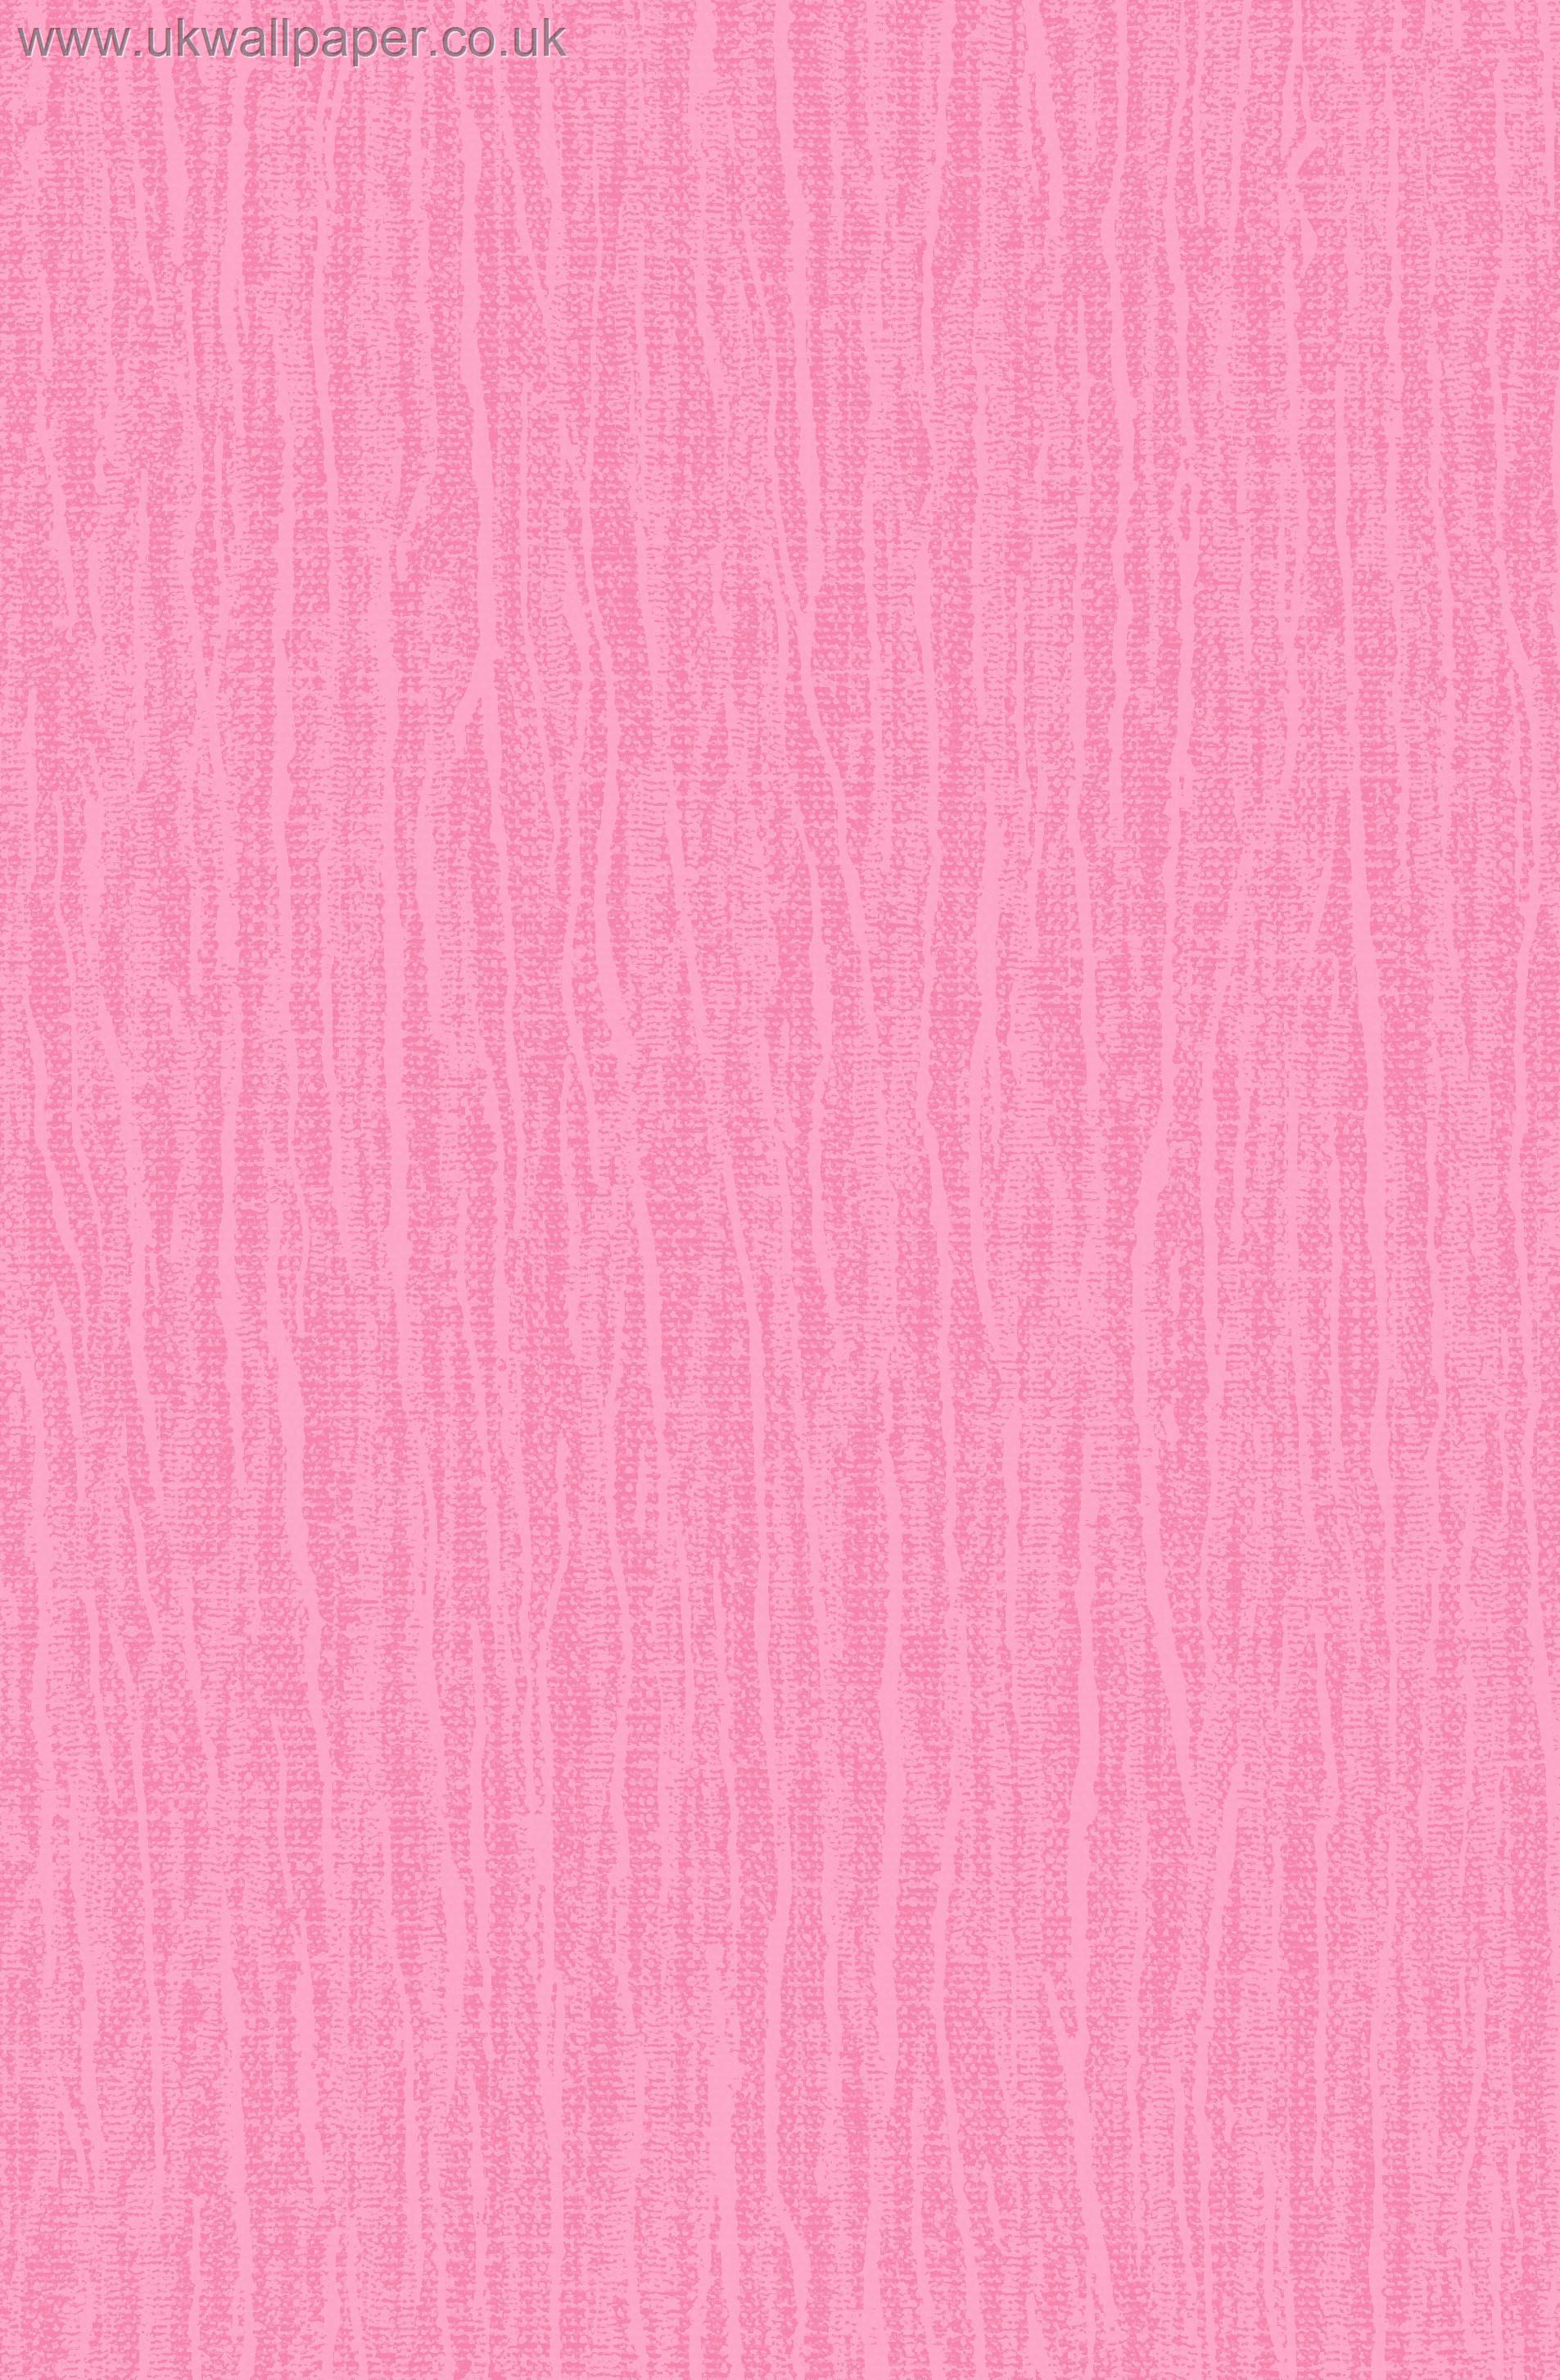  wallpaper plain pink wallpaper 10metres x 52cm random match 7 99